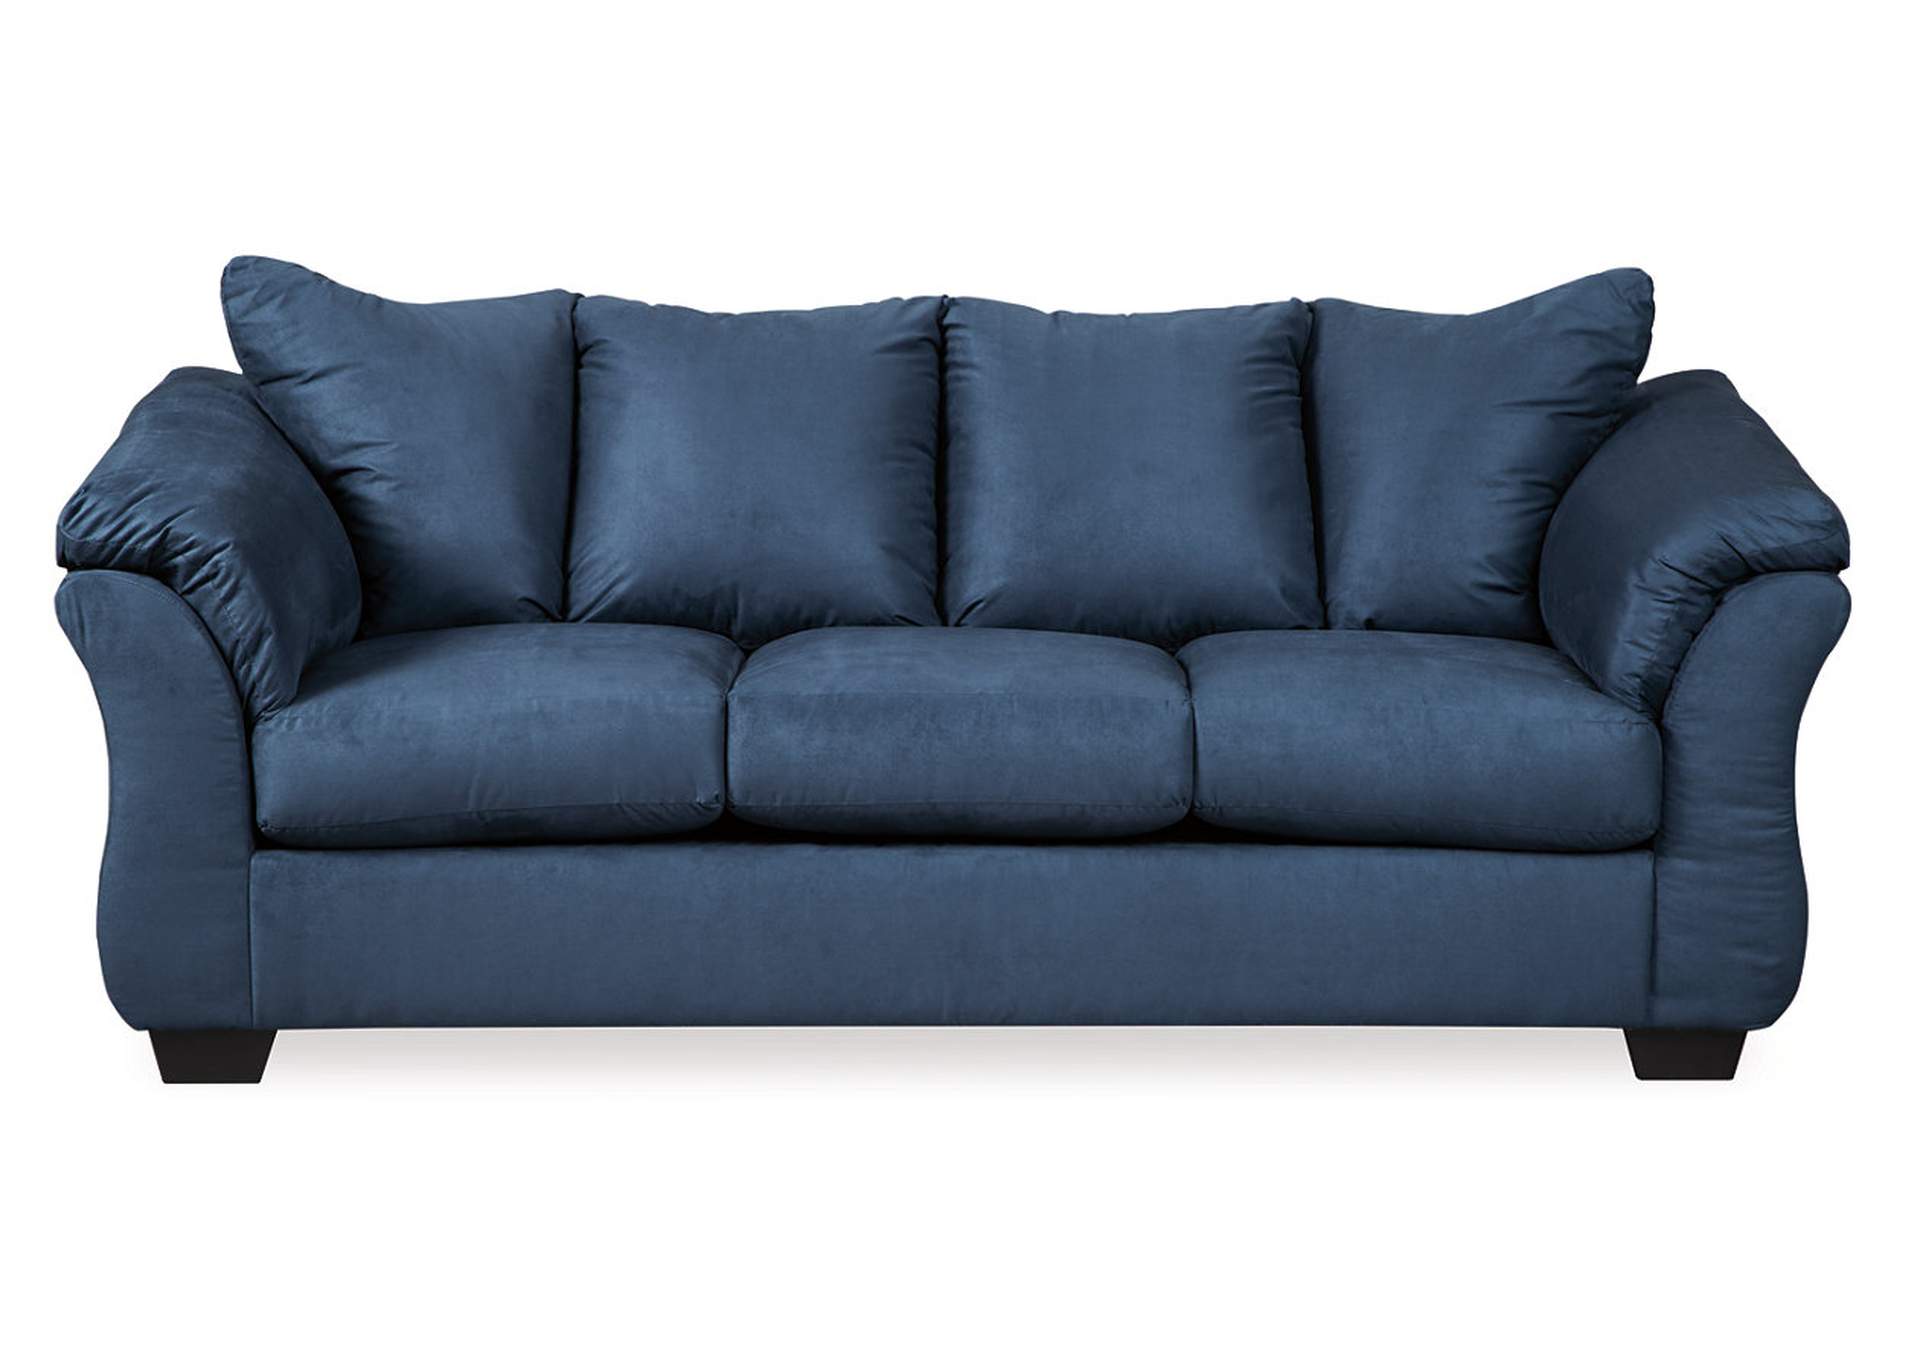 ashley furniture blue sofa bed